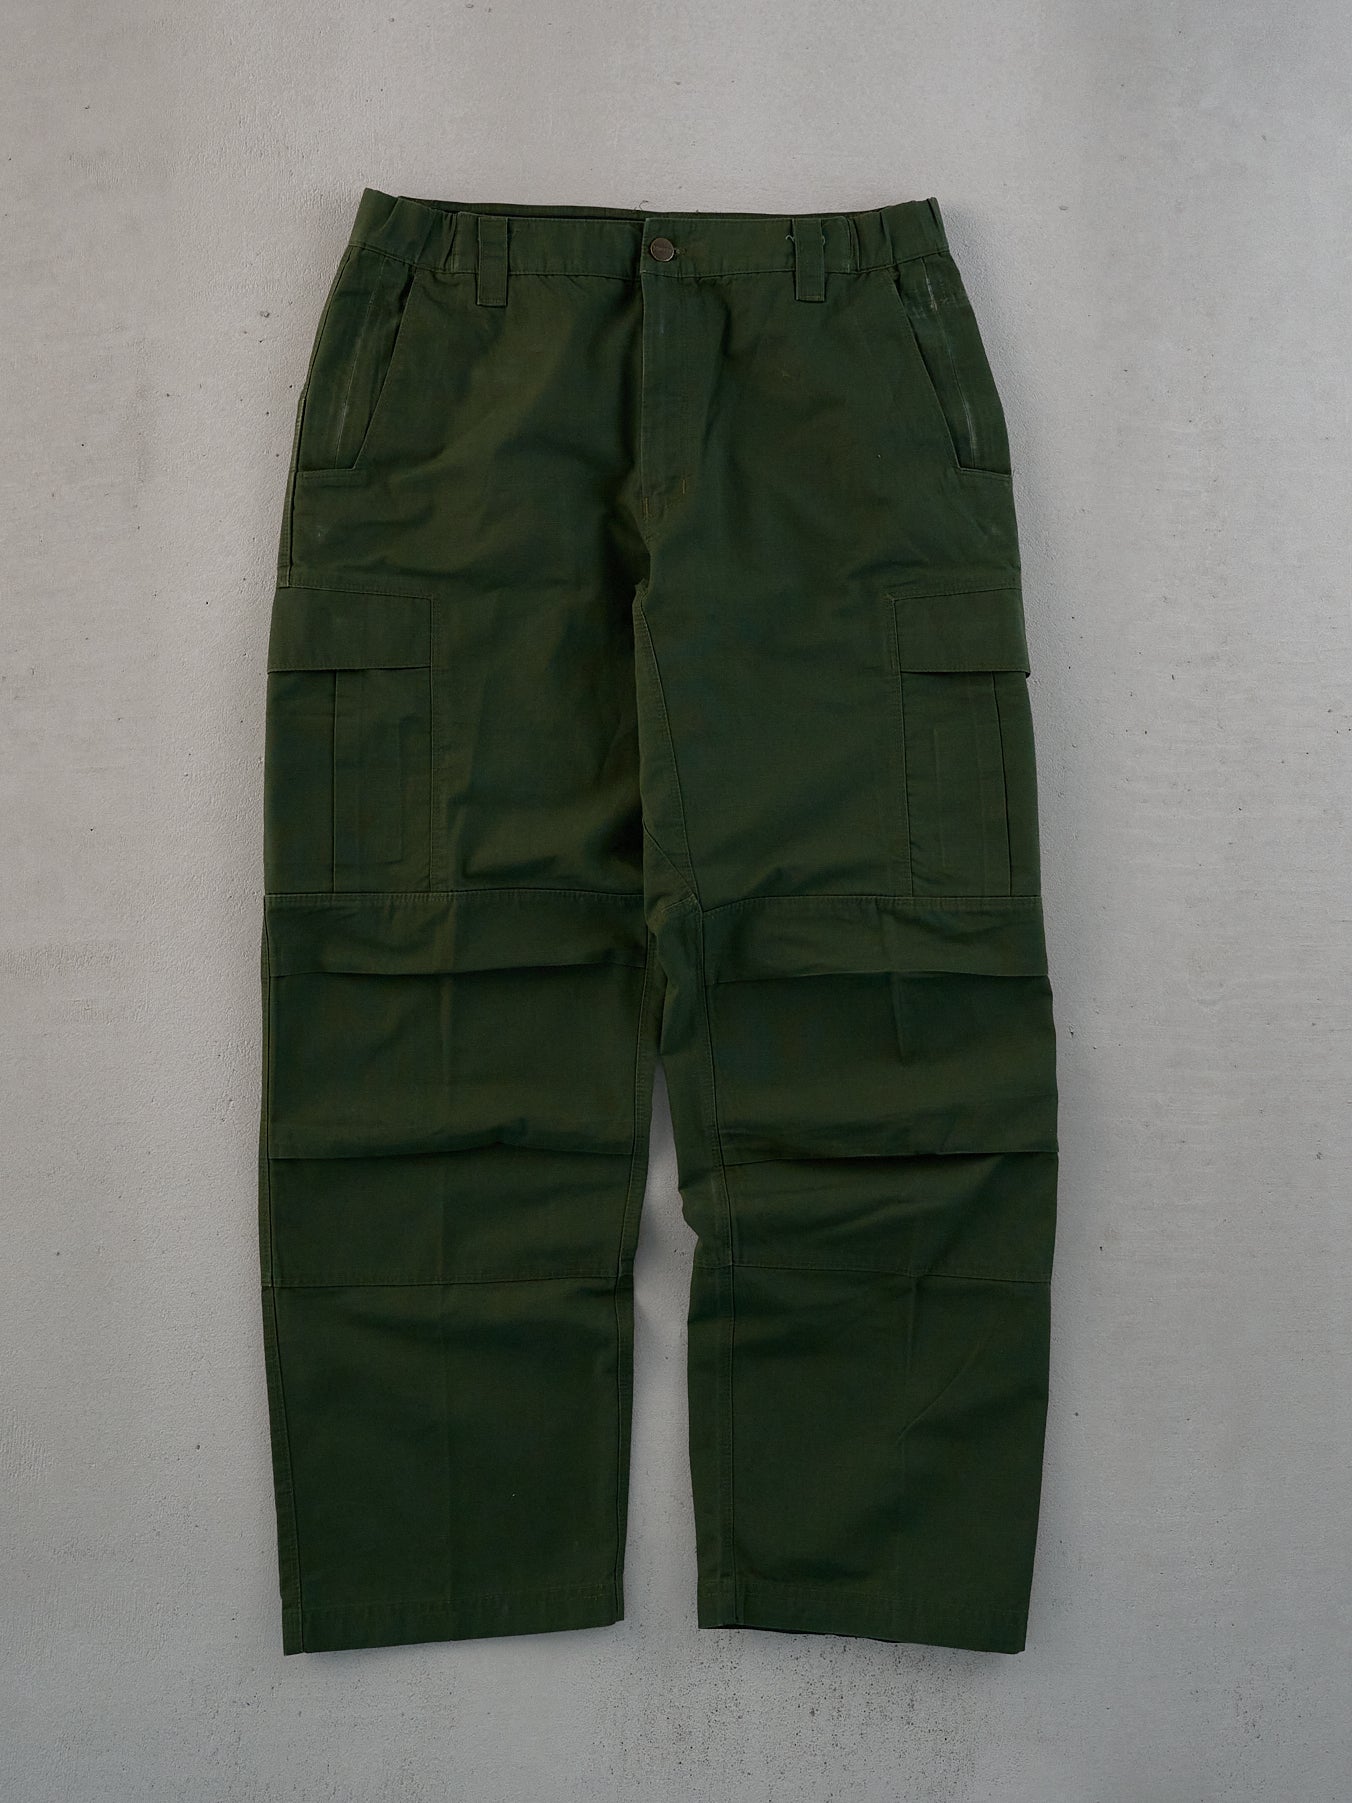 Vintage 90s Green Vertx Army Cargo Pants (32x29)